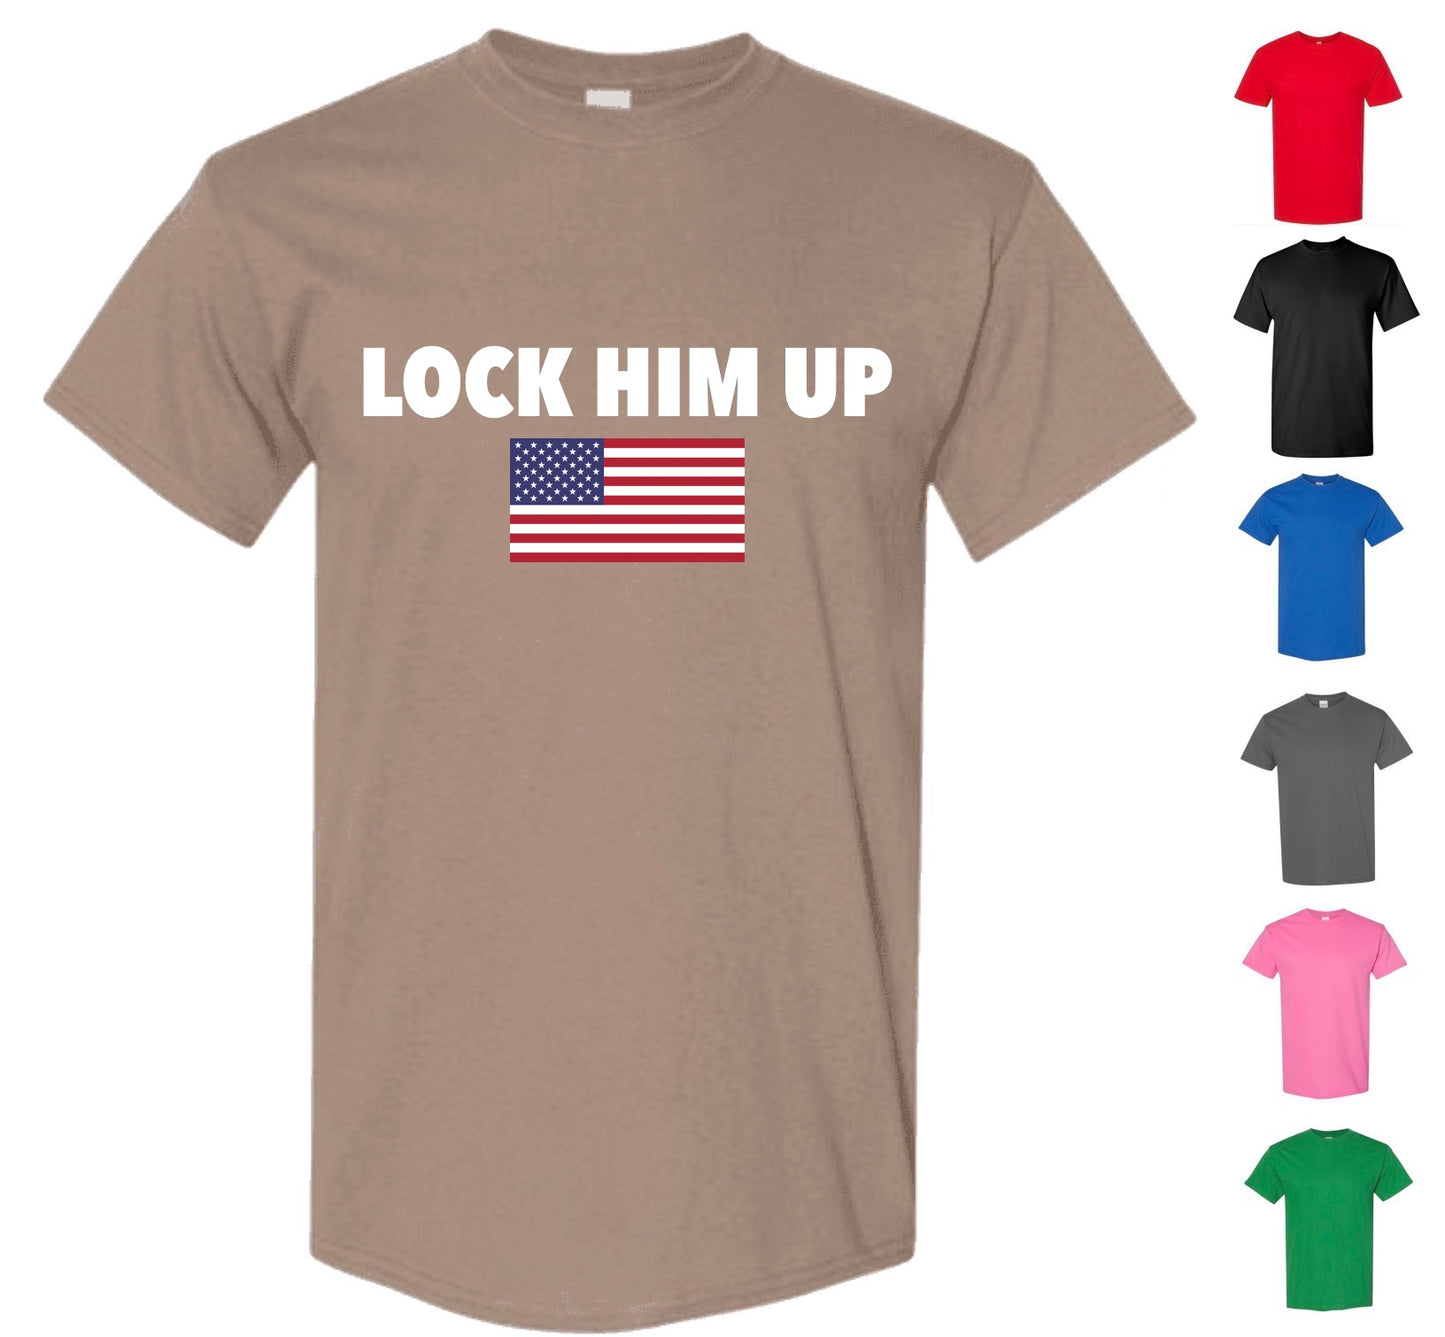 Lock Him Up Shirt — Free Shipping!